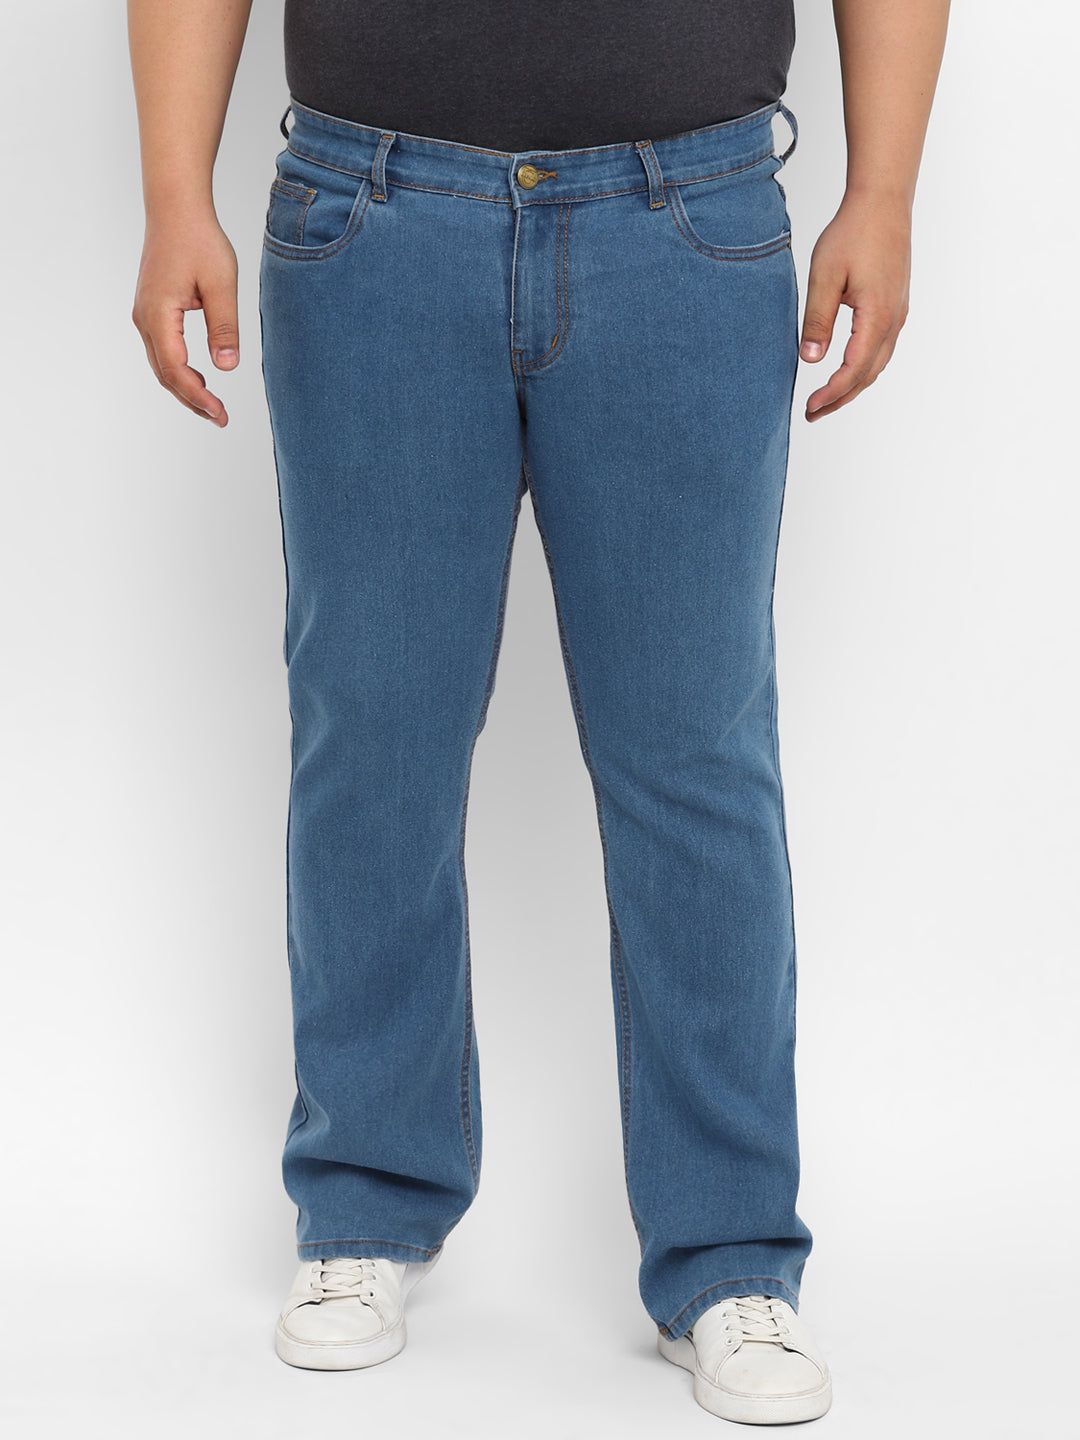 Plus Men's Light Blue Regular Fit Washed Denim Bootcut Jeans Stretchable